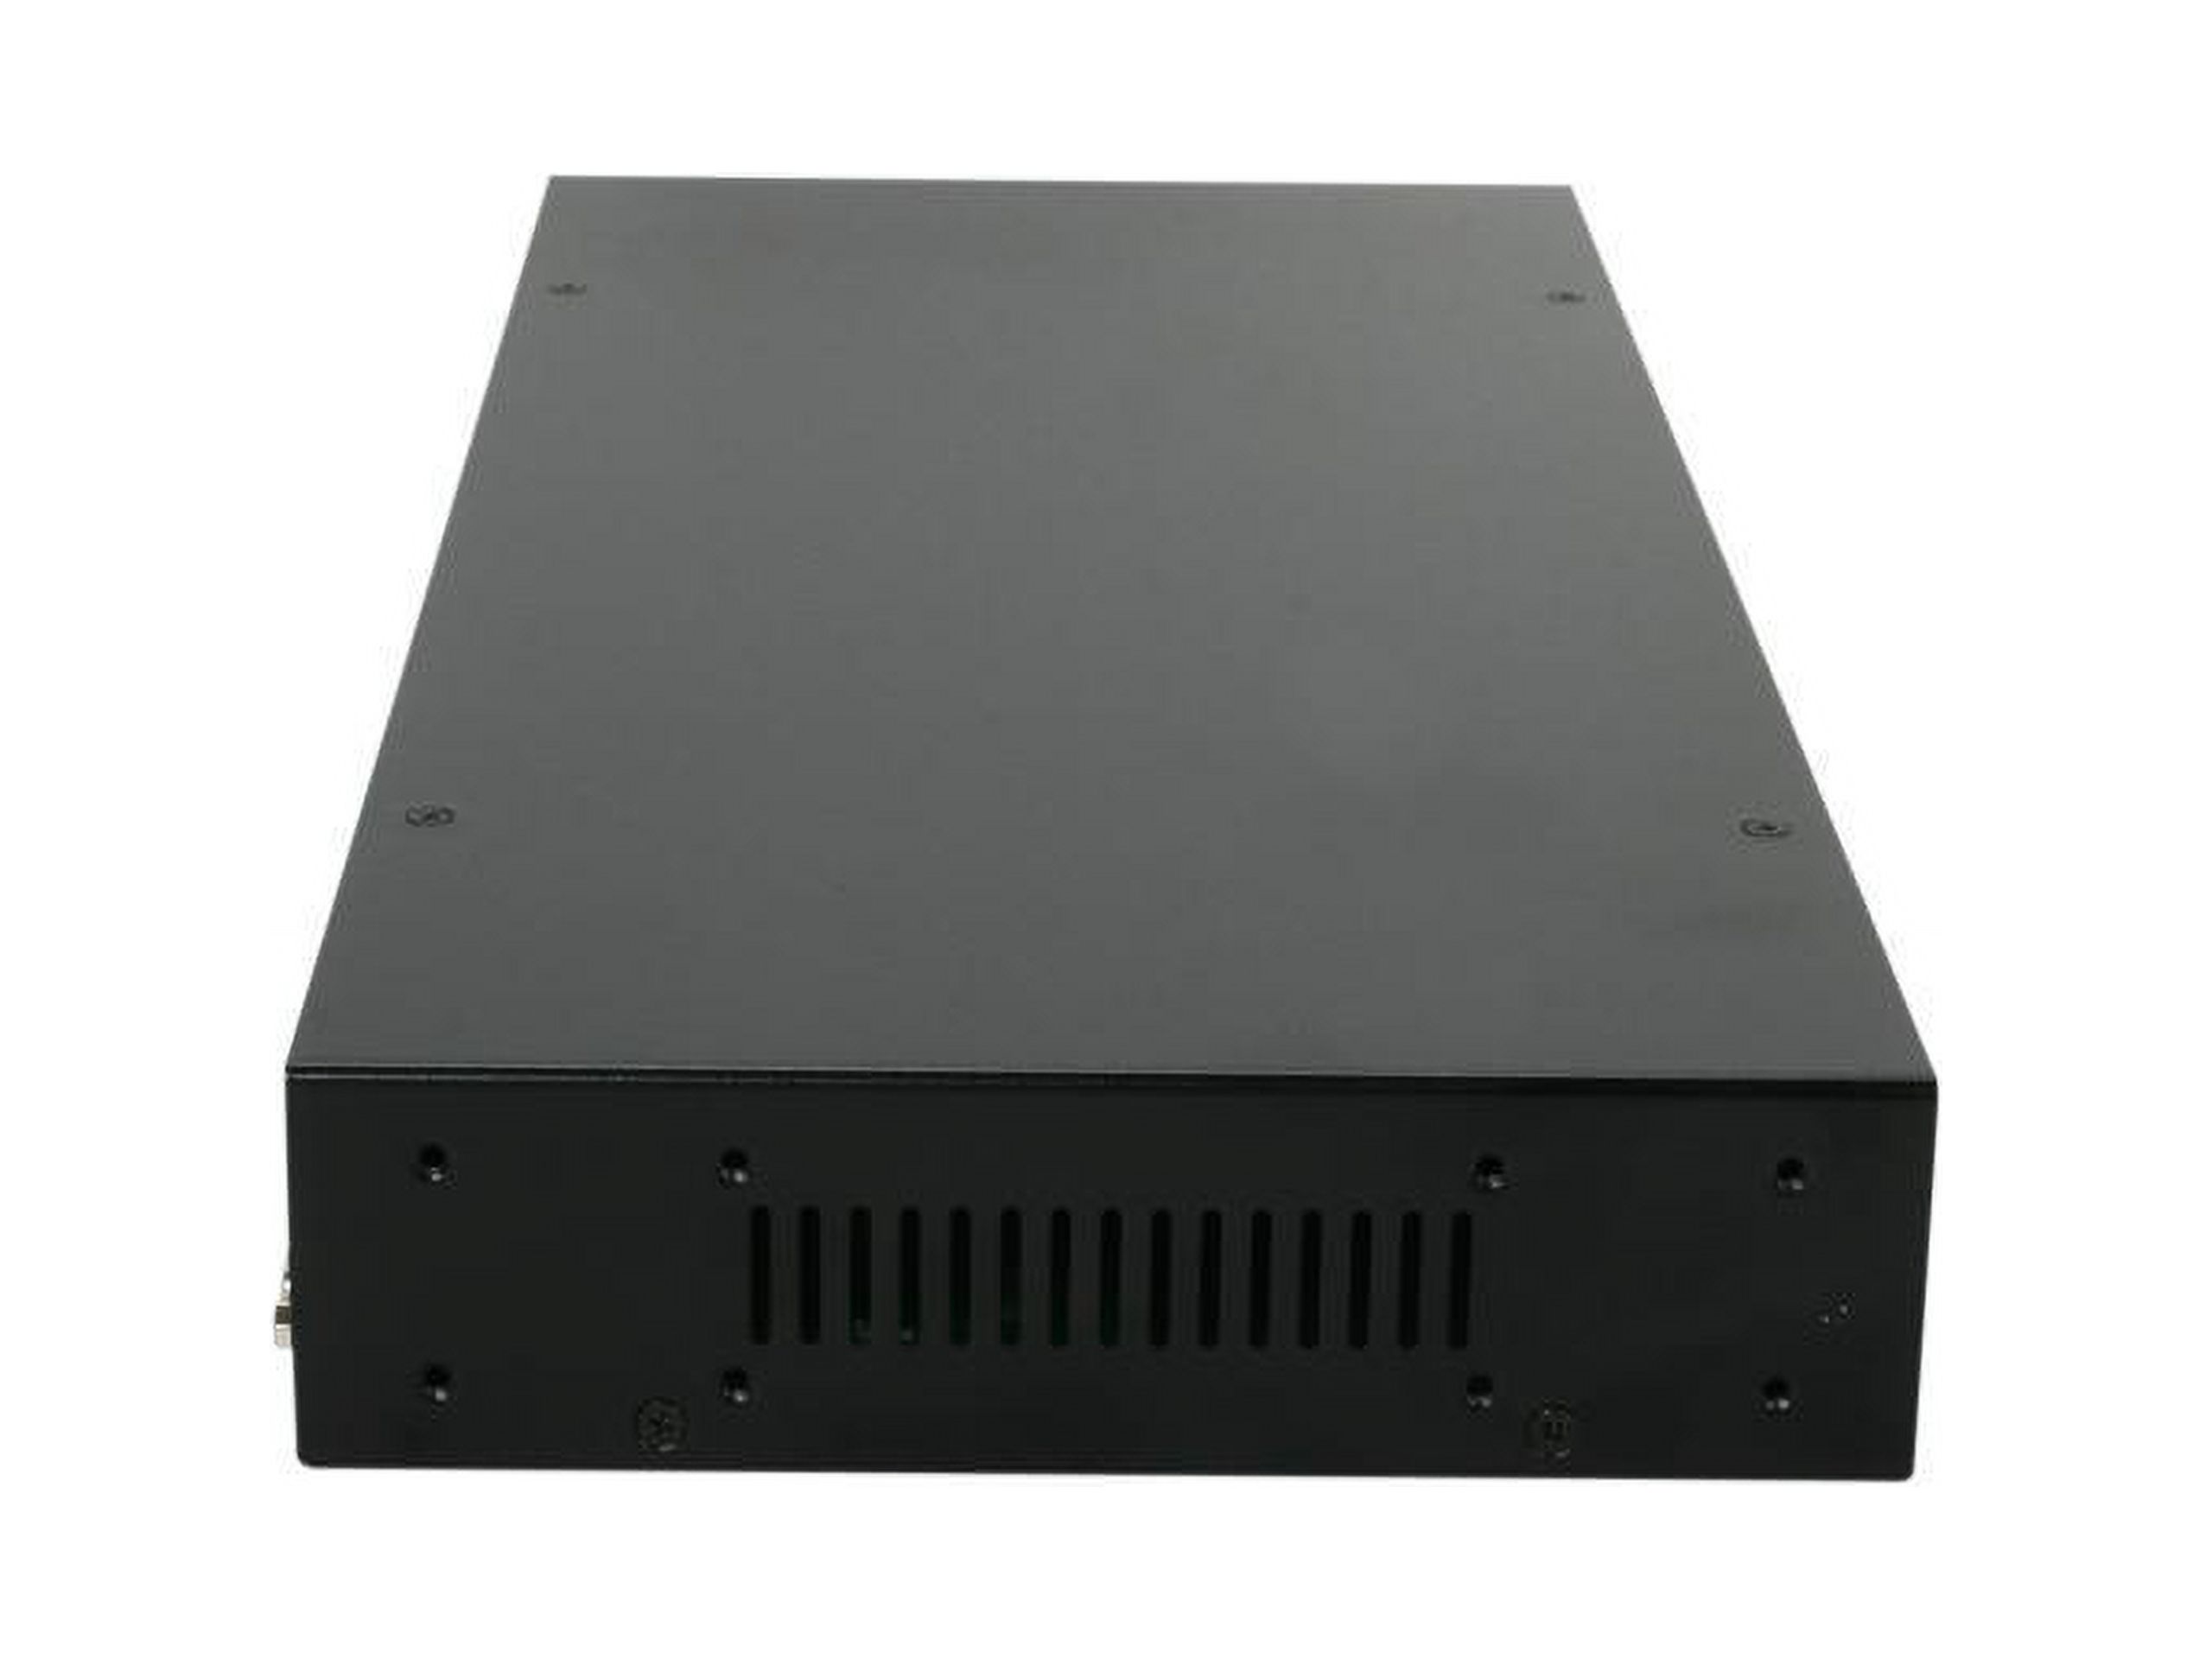 Tripp Lite 8-Port 1U Rack-Mount USB/PS2 KVM Switch with On-Screen Display (B042-008) - image 2 of 4